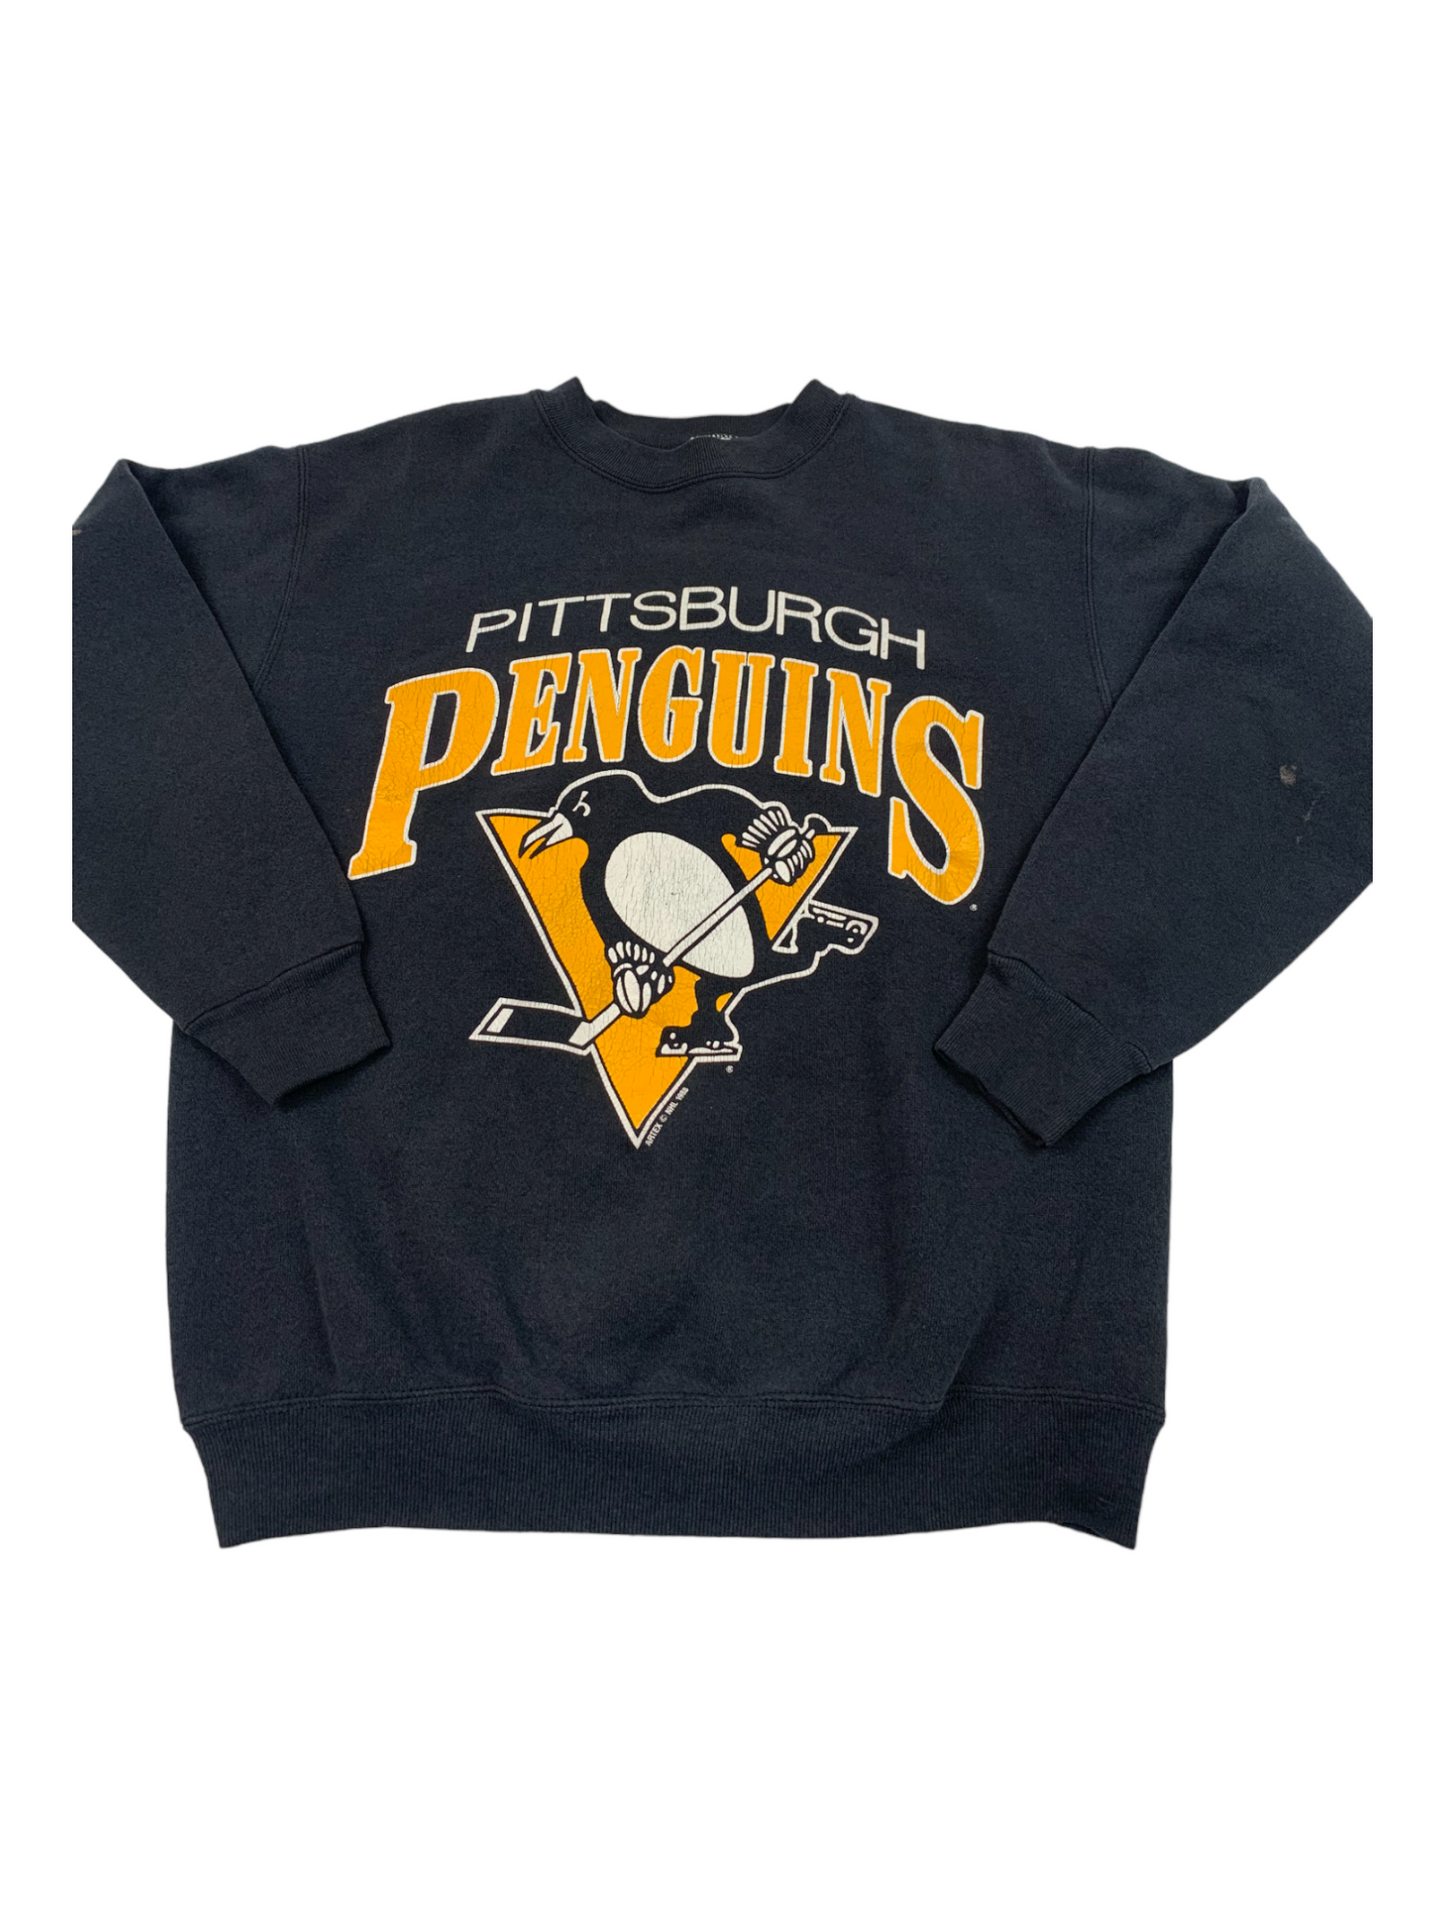 Pittsburgh Penguins Crewneck